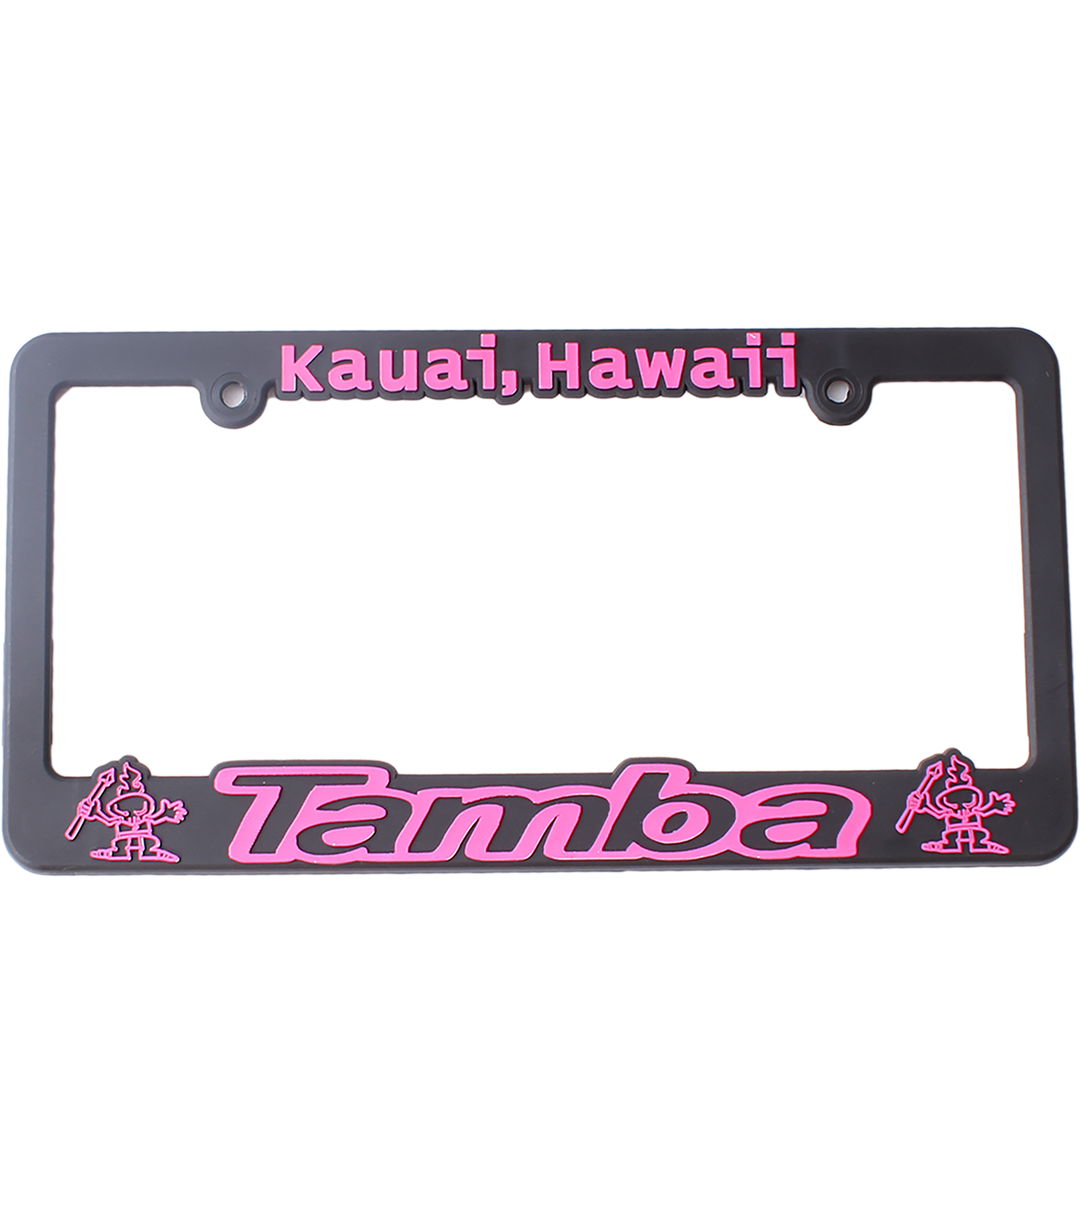 Tamba License Plate Frame